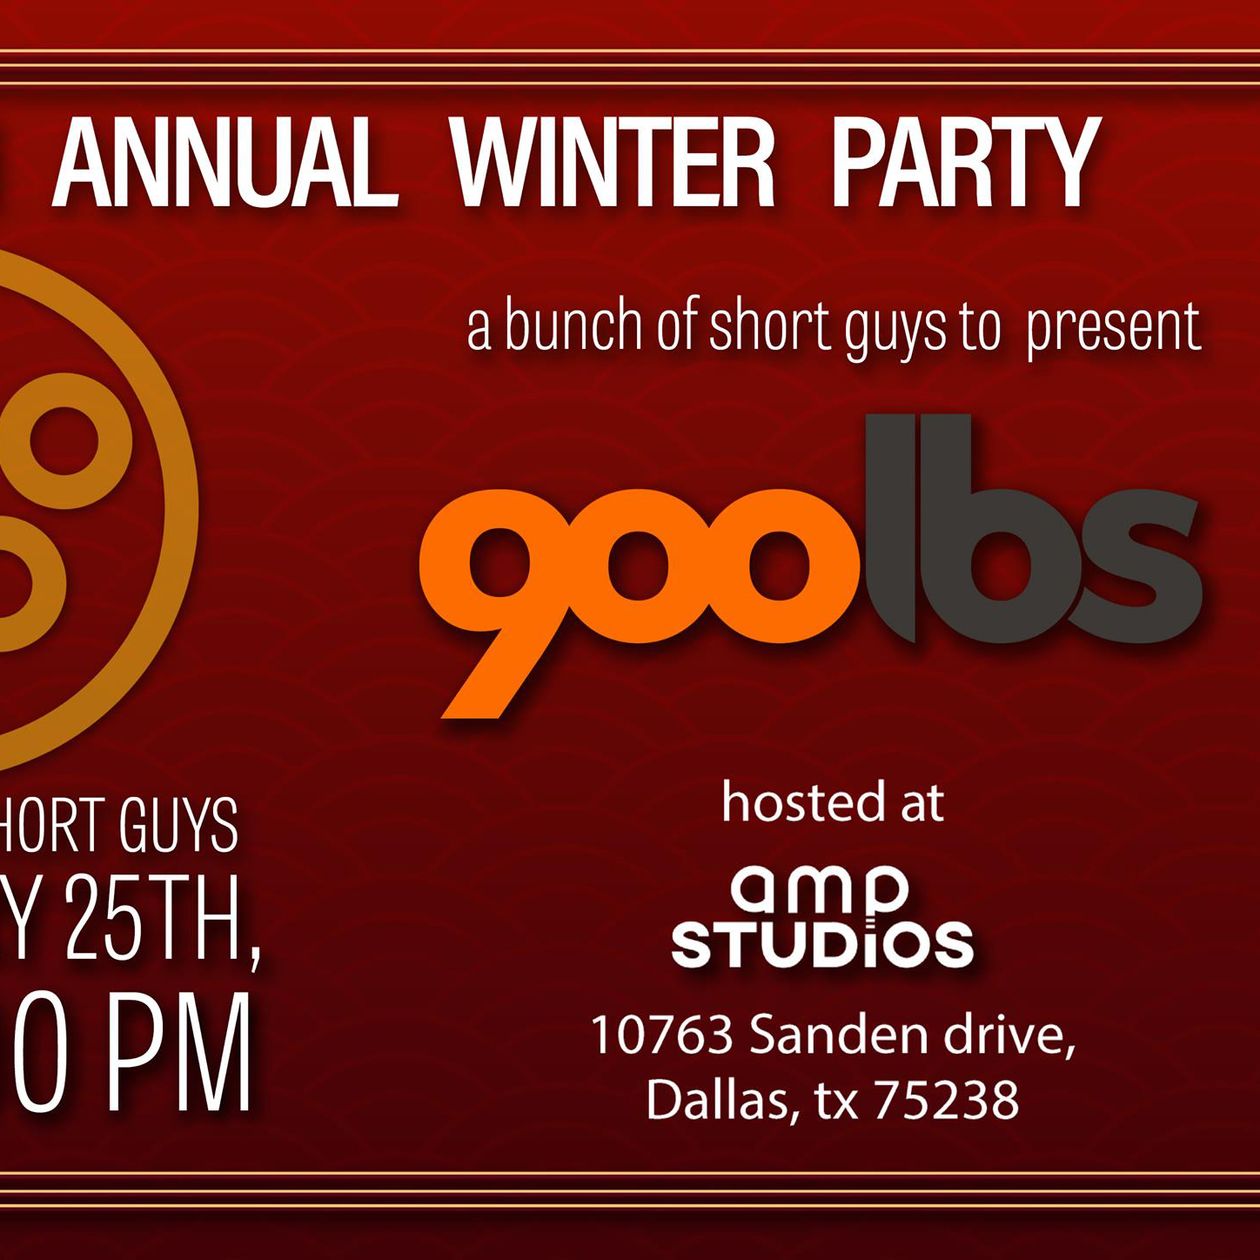 ABOSG and IGDA Dallas 4th Annual Winter Party